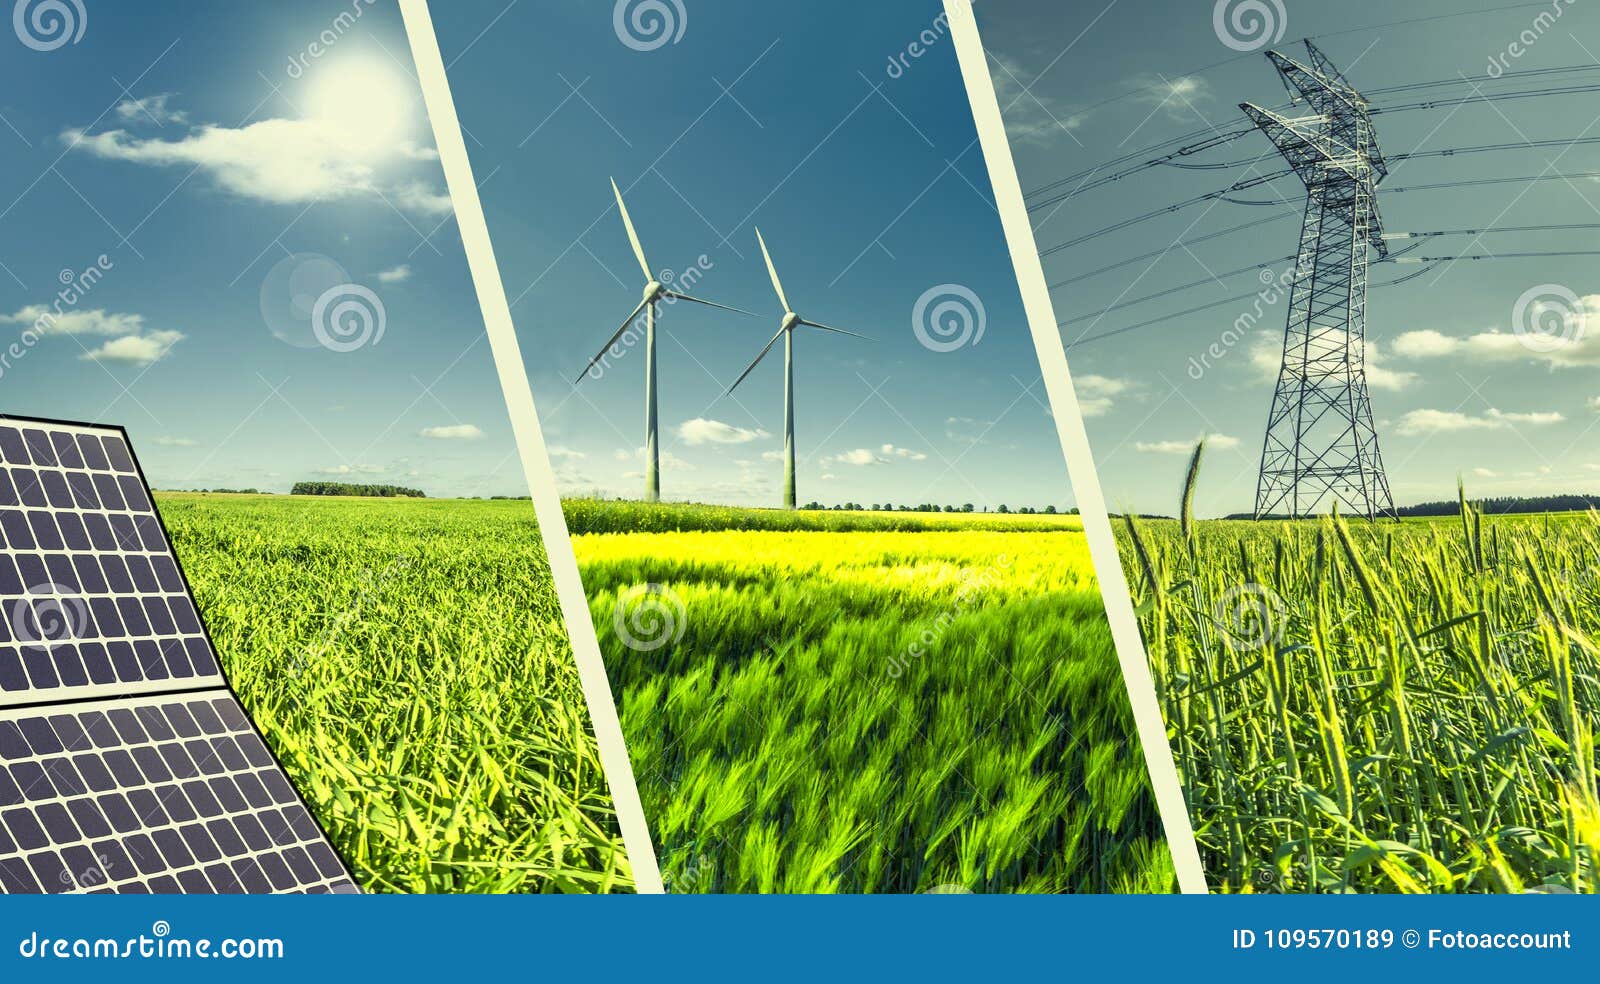 renewable power energies concept collage